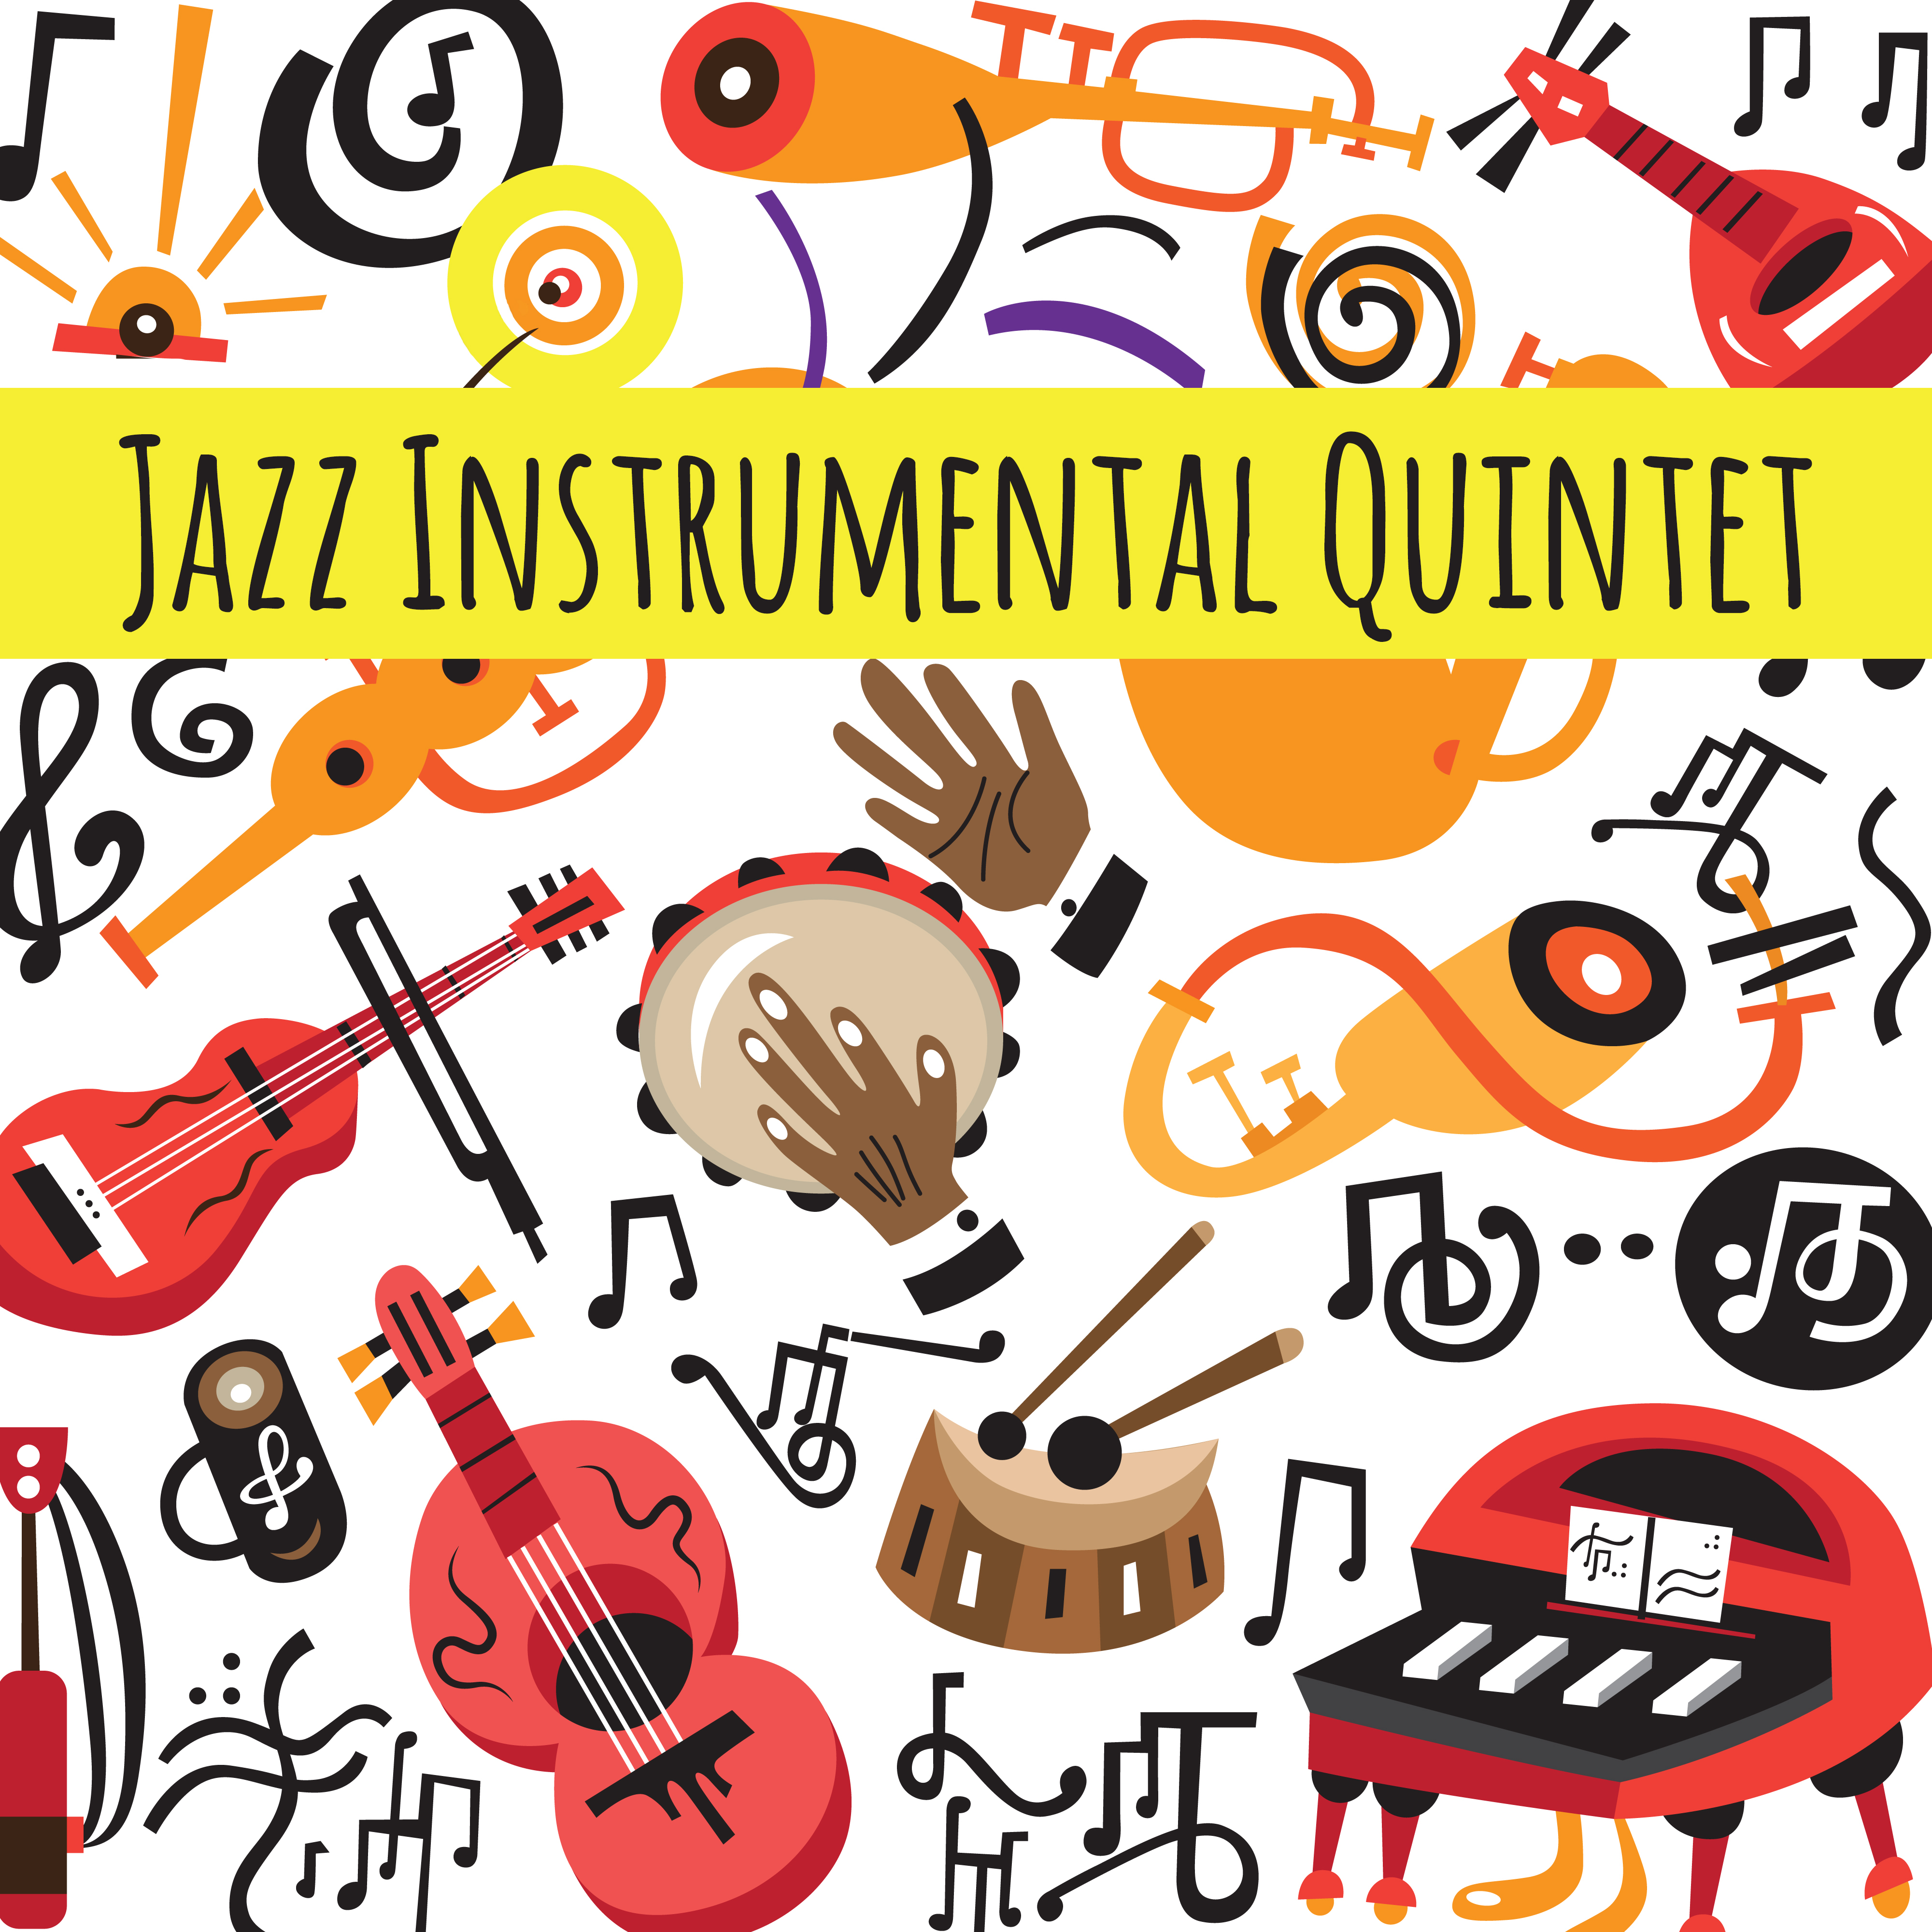 Jazz Instrumental Quintet: Saxophone, Trumpet, Piano, Guitar and Percussion